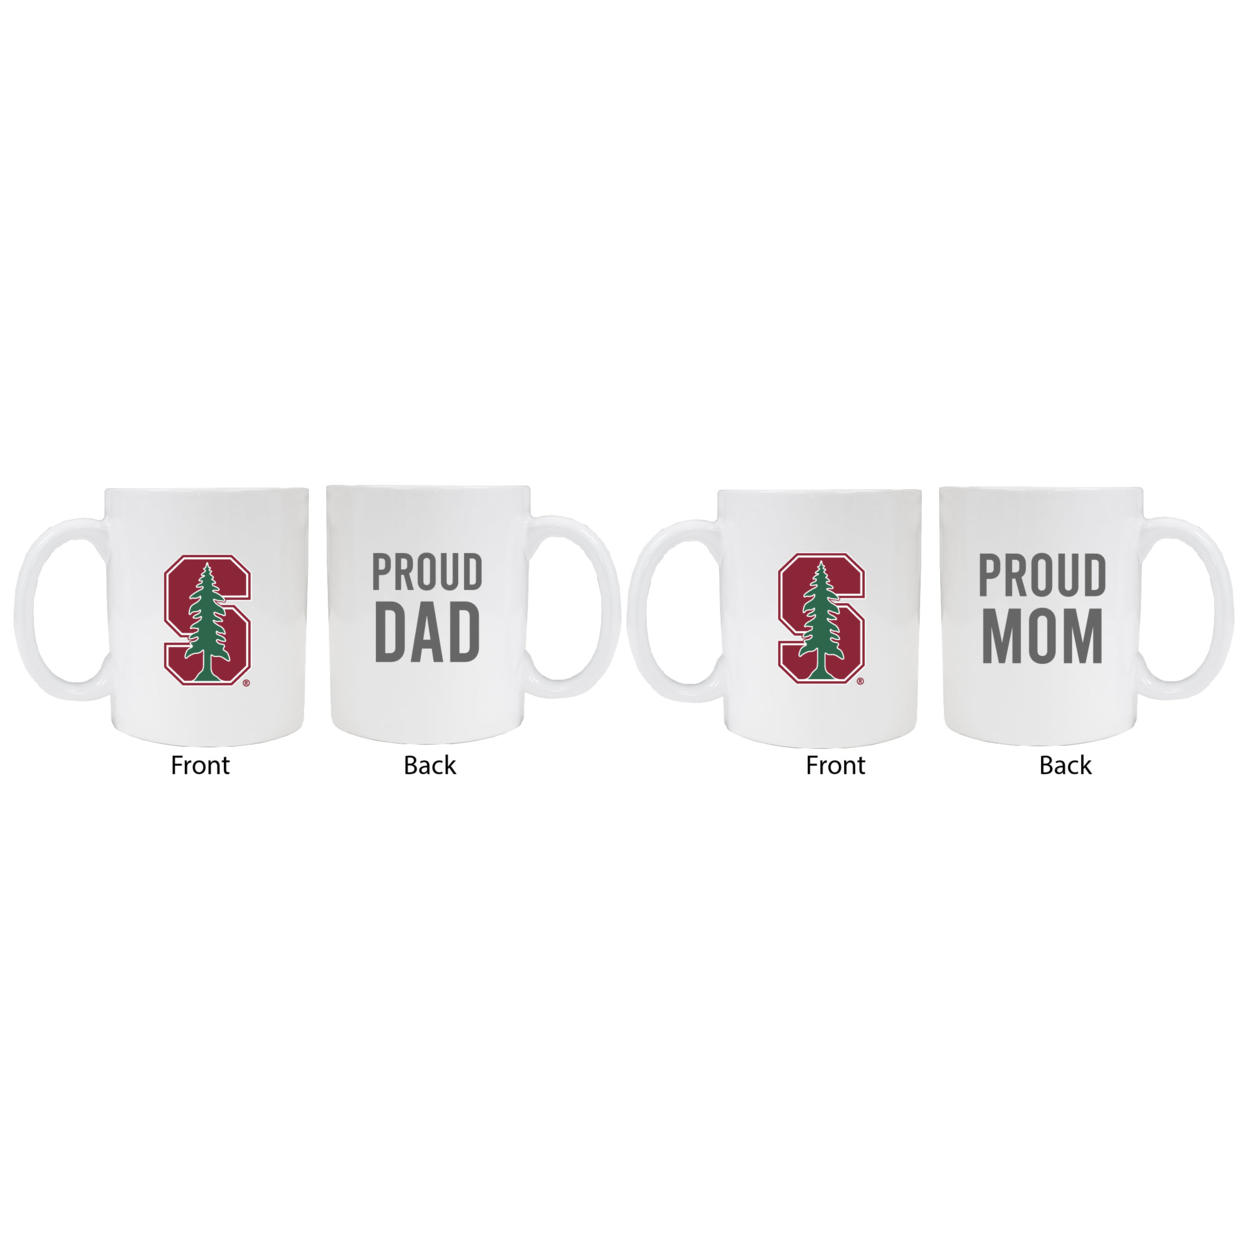 Stanford University Proud Mom And Dad White Ceramic Coffee Mug 2 Pack (White).